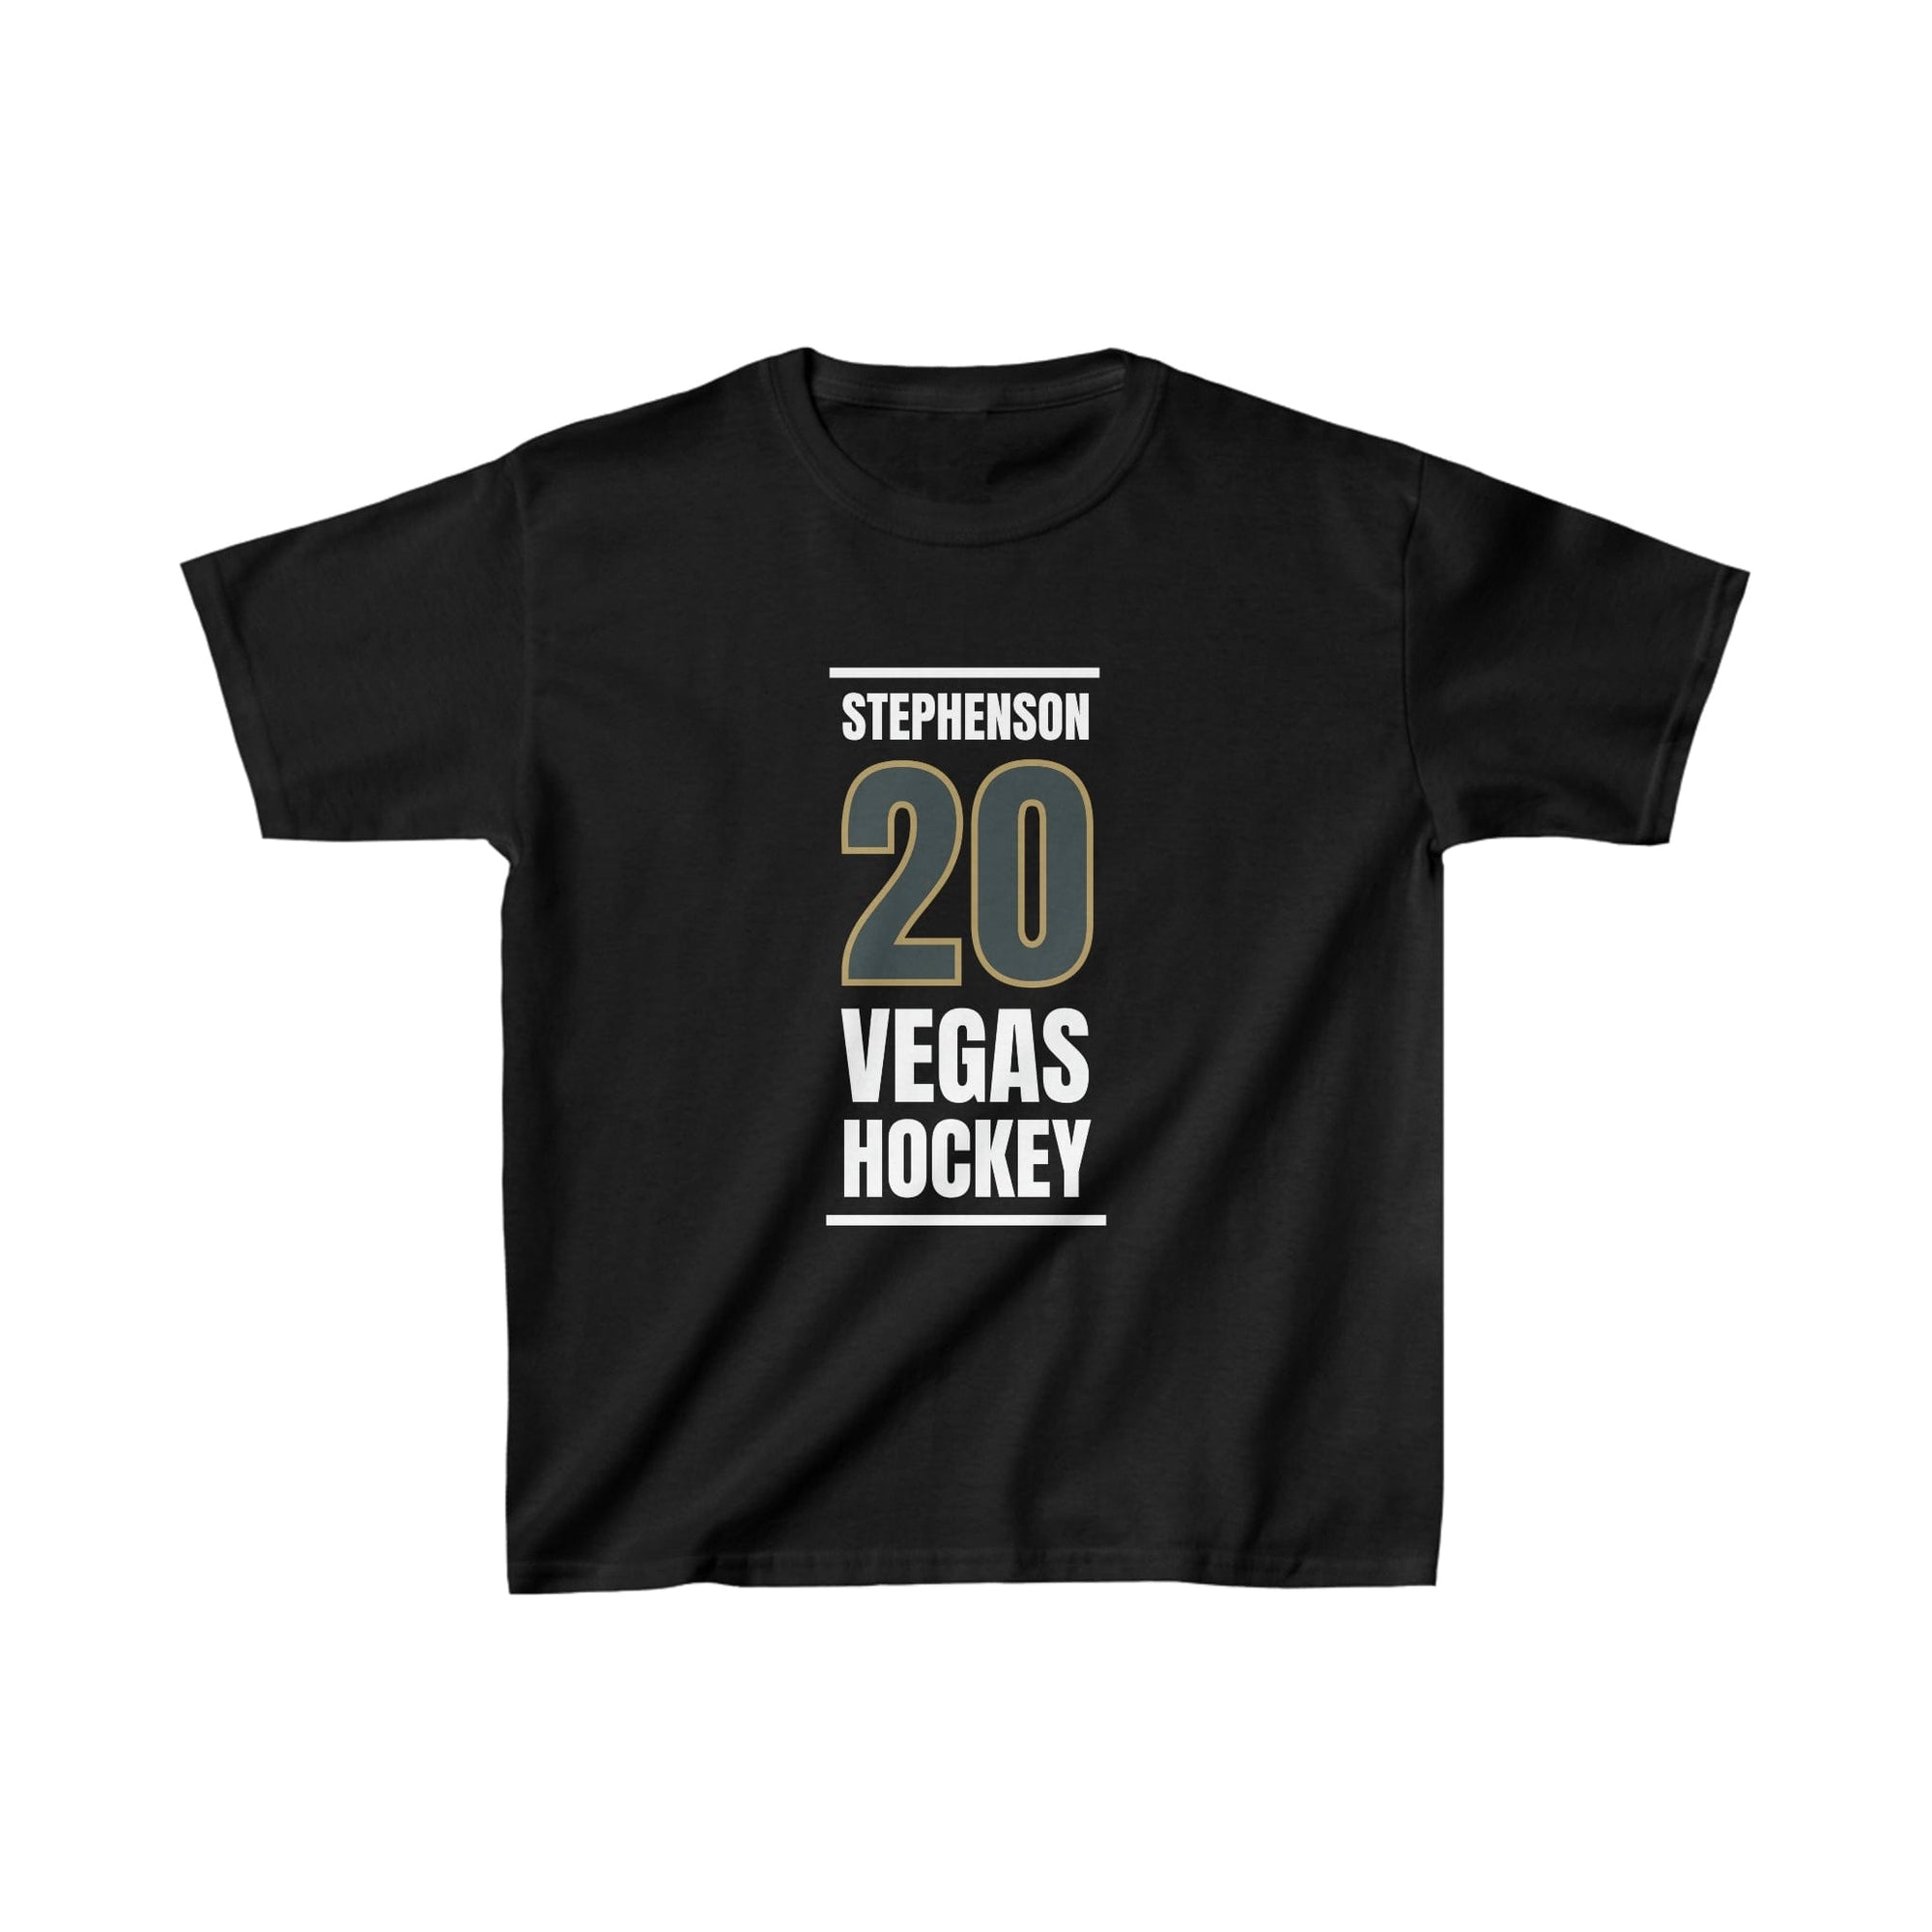 Kids clothes Stephenson 20 Vegas Hockey Steel Gray Vertical Design Kids Tee